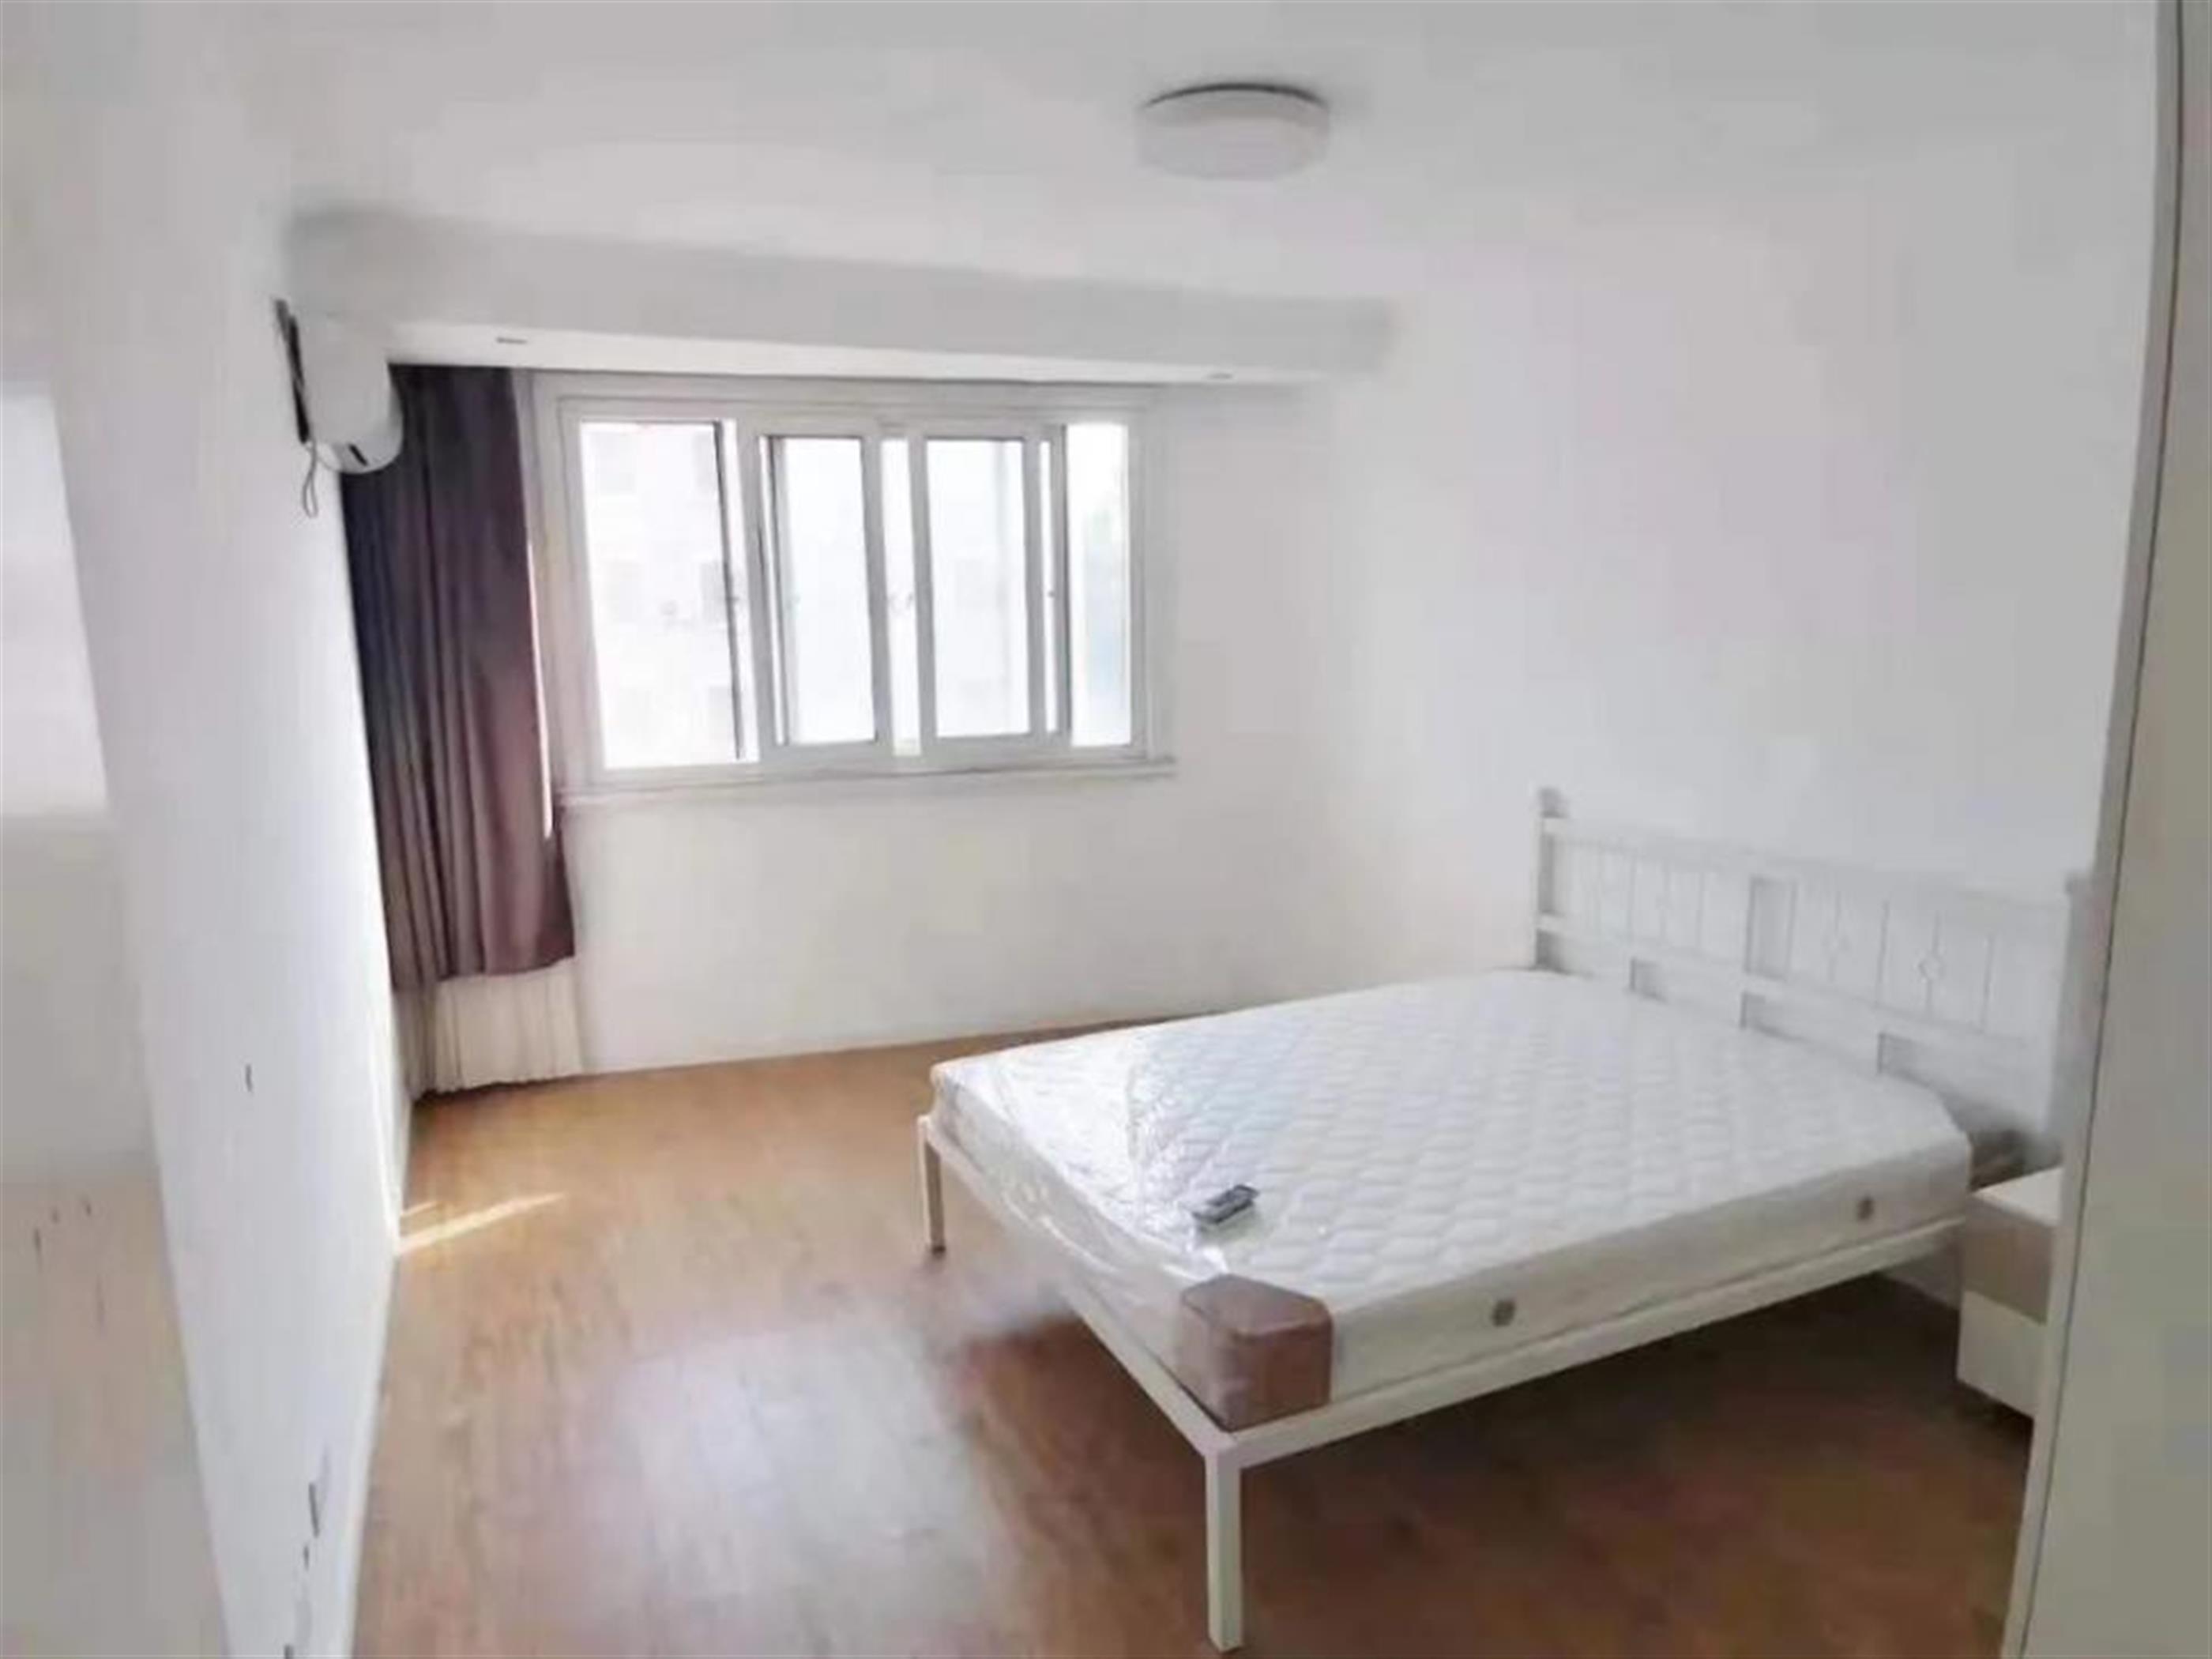 sunny bedroom Bright Spacious 2BR Mandarine City Apartment Nr LN 10 for Rent in Shanghai